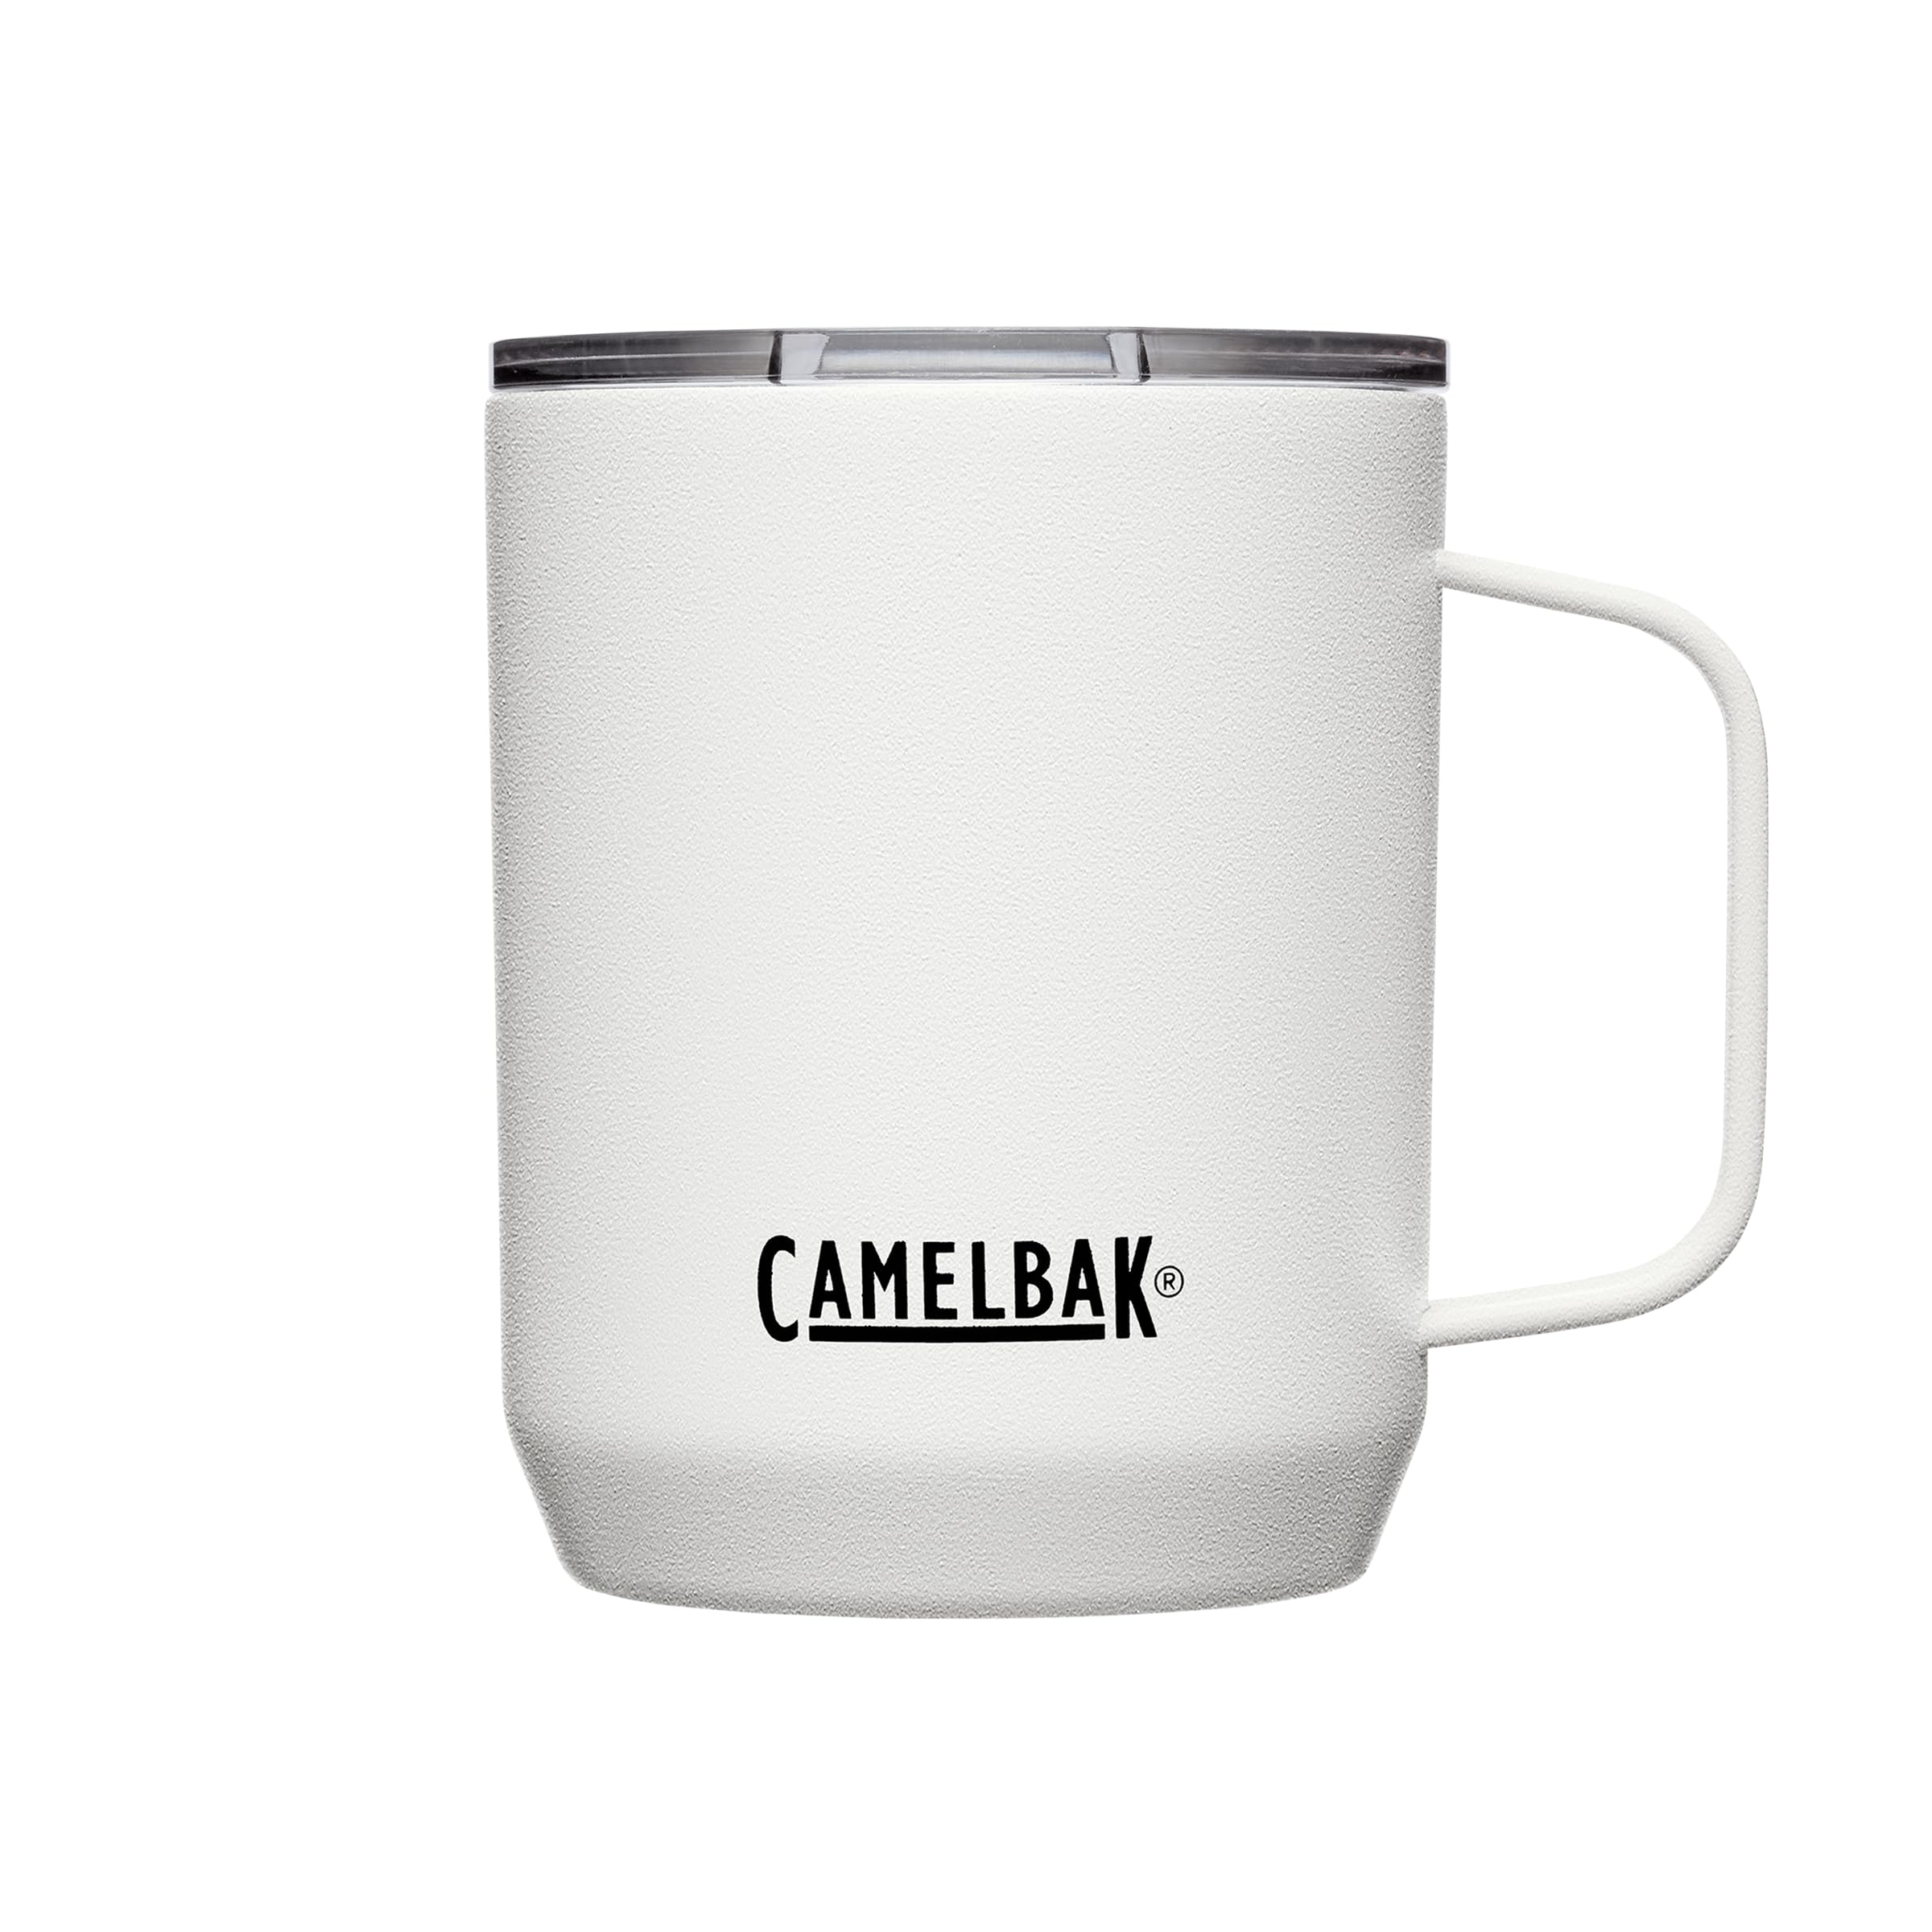 Camelbak Horizon vakuumisolierter Campingbecher aus Edelstahl, 350 ml Weiß